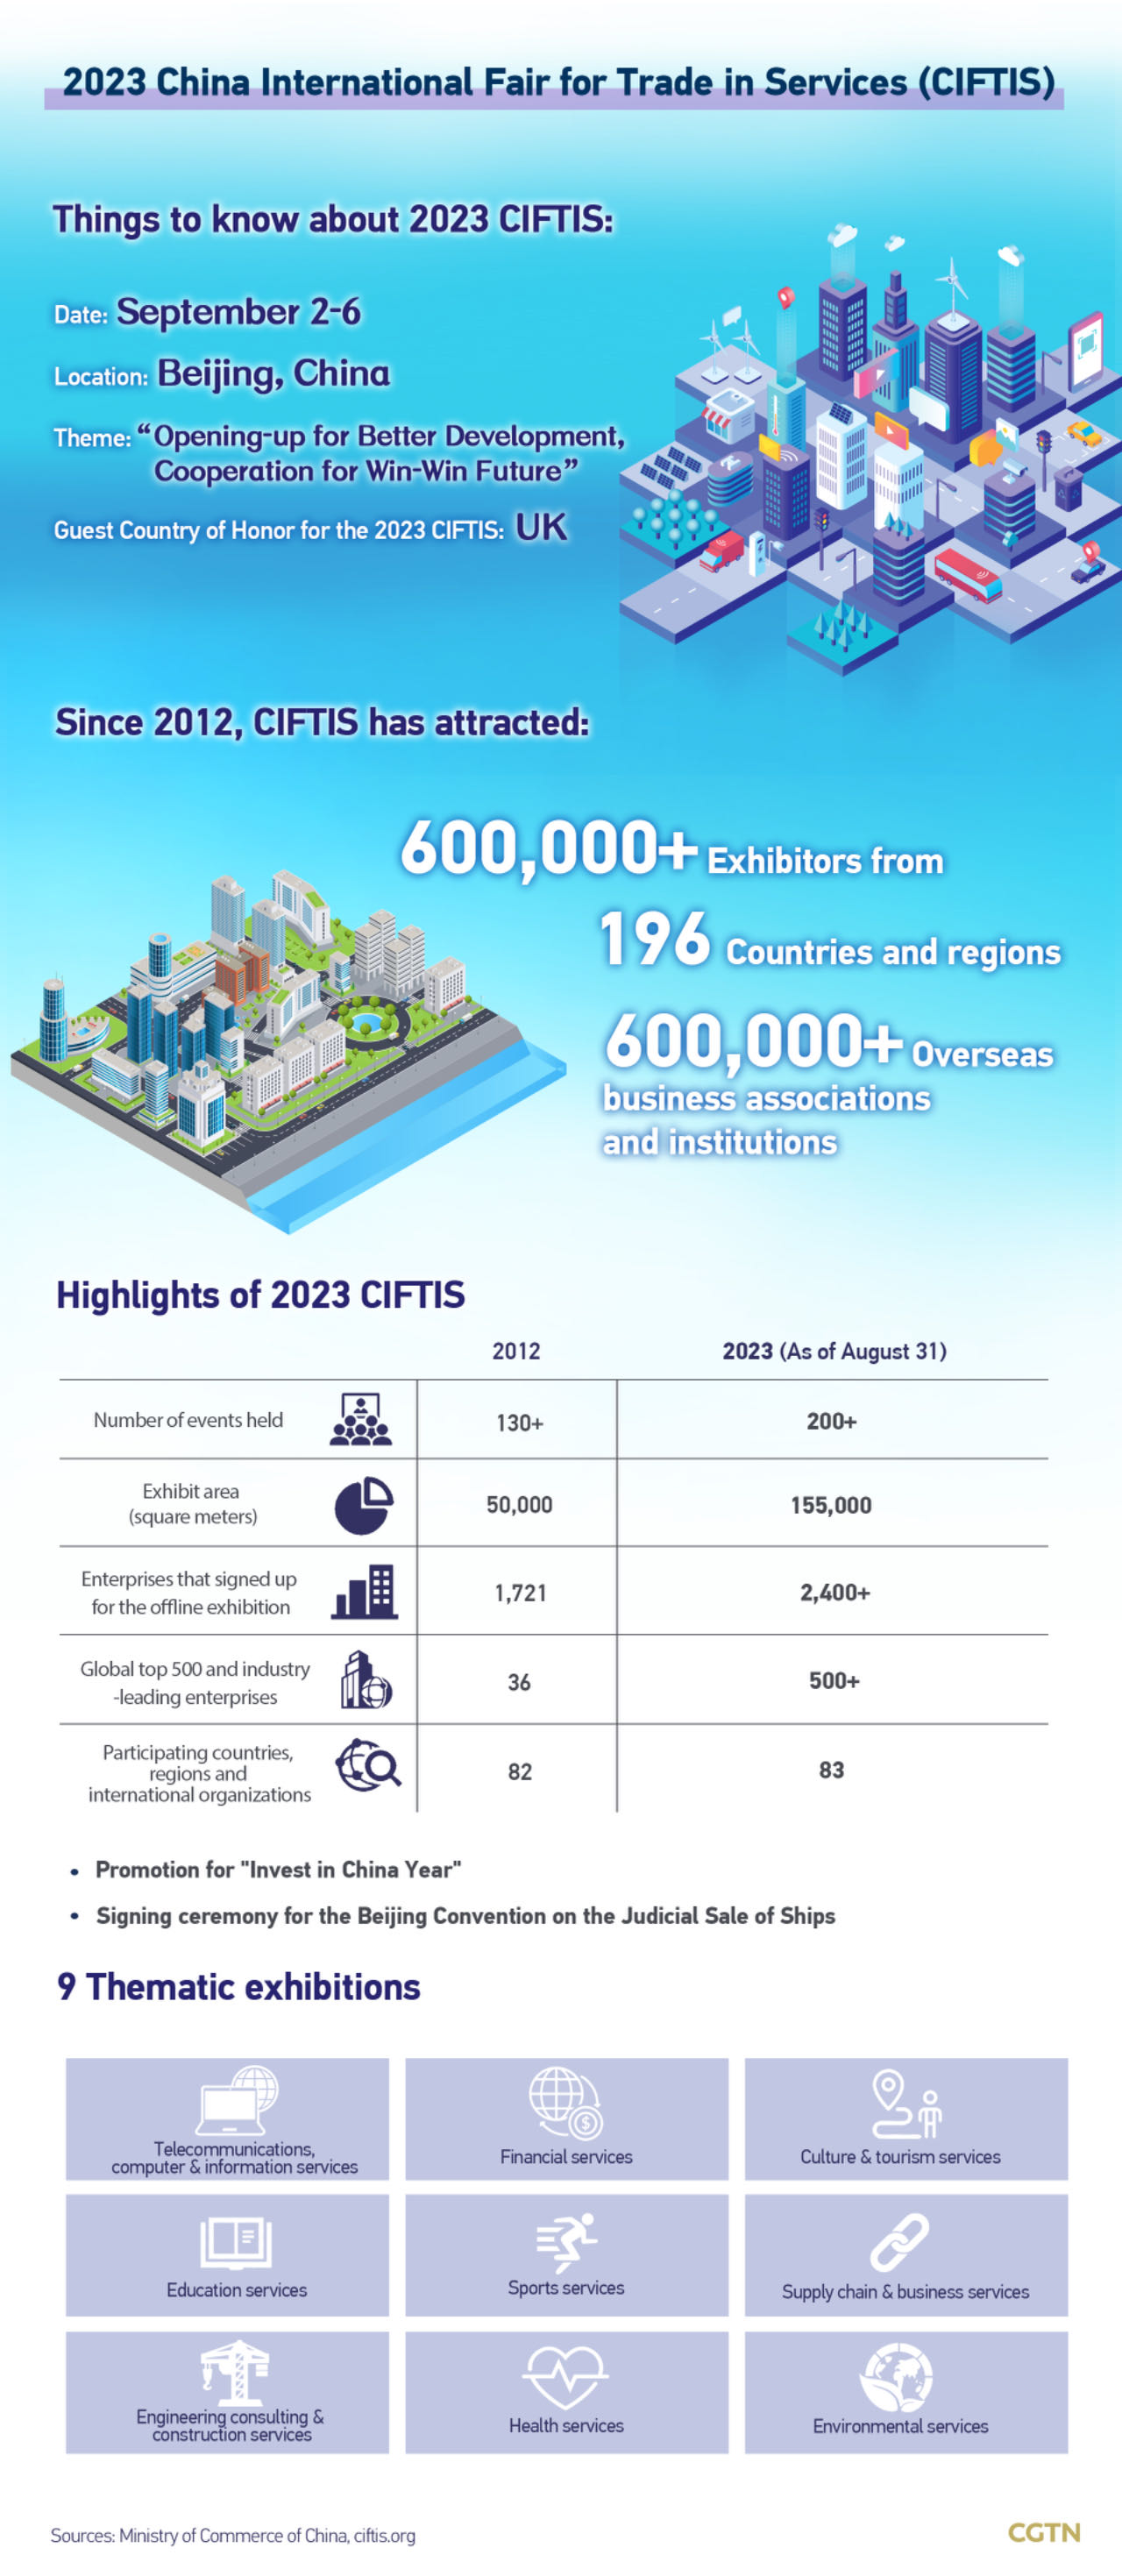 CGTN infographic by Sun Yiwen